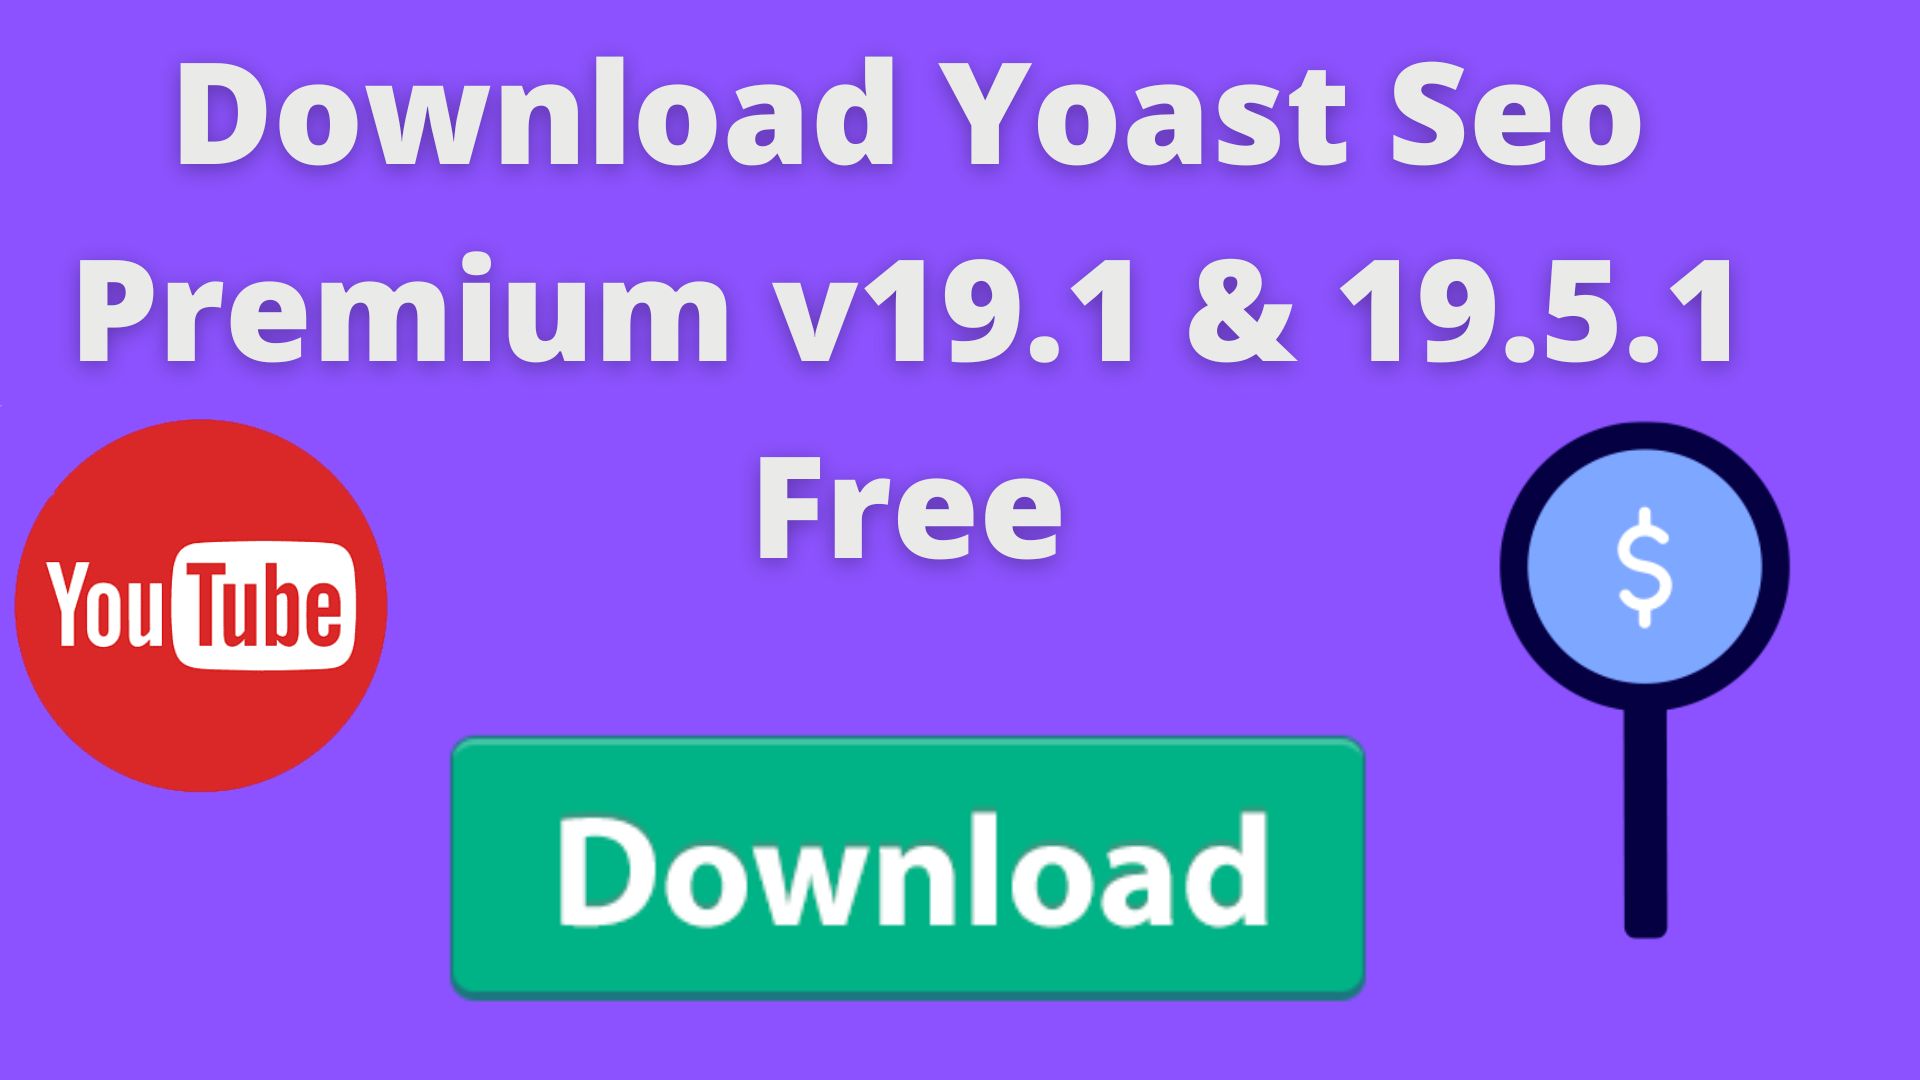 Download yoast seo premium v19. 1 & 19. 5. 1 free